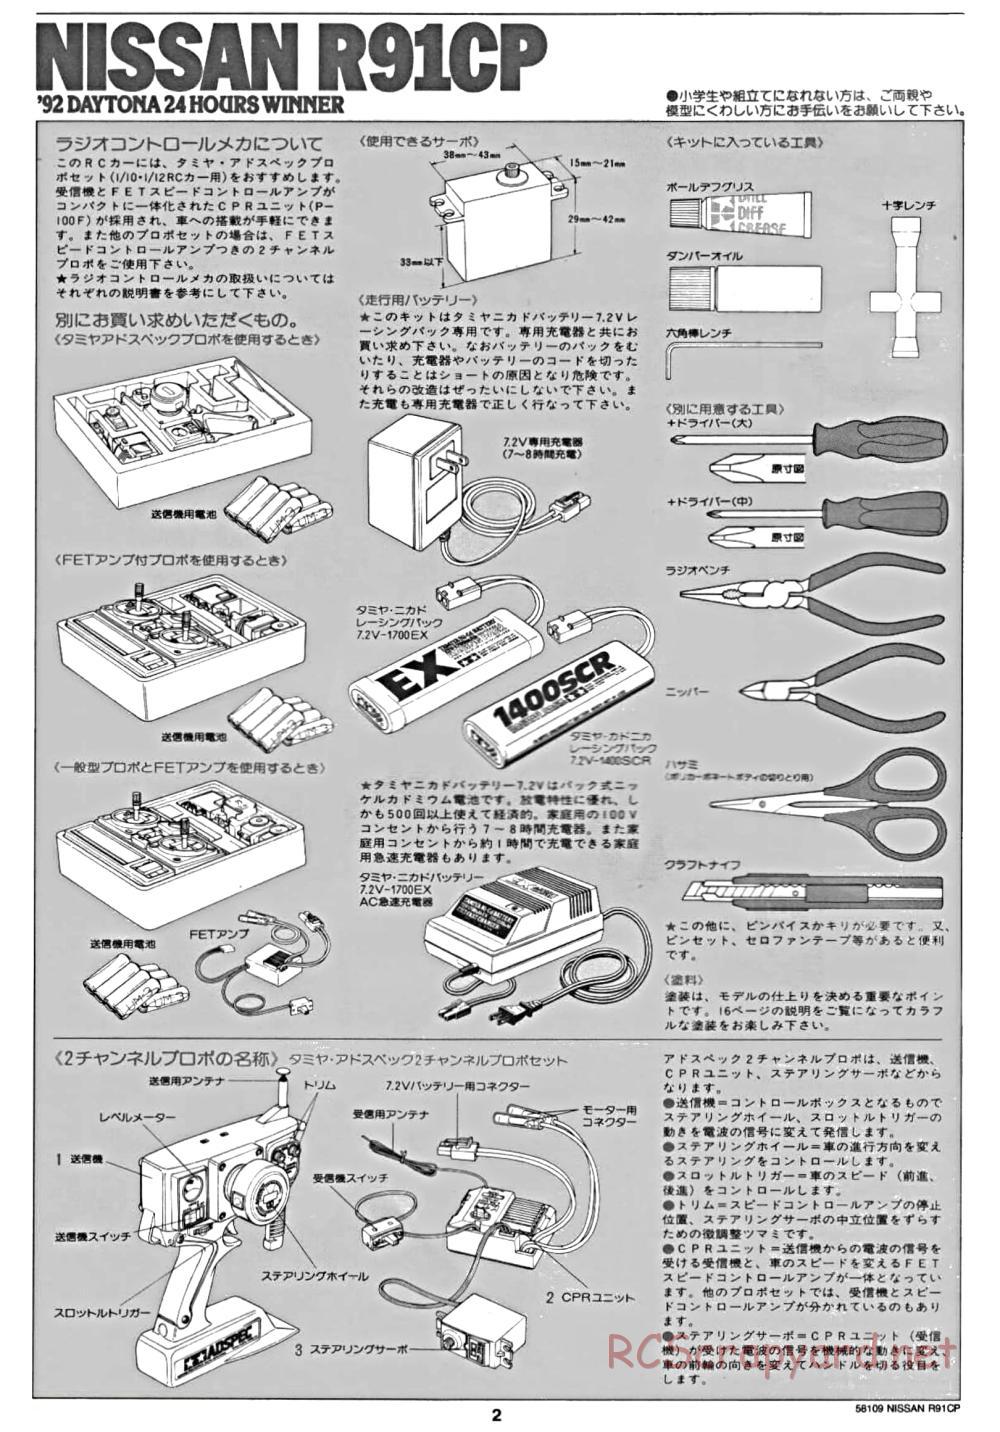 Tamiya - Nissan R91CP - Group-C Chassis - Manual - Page 2